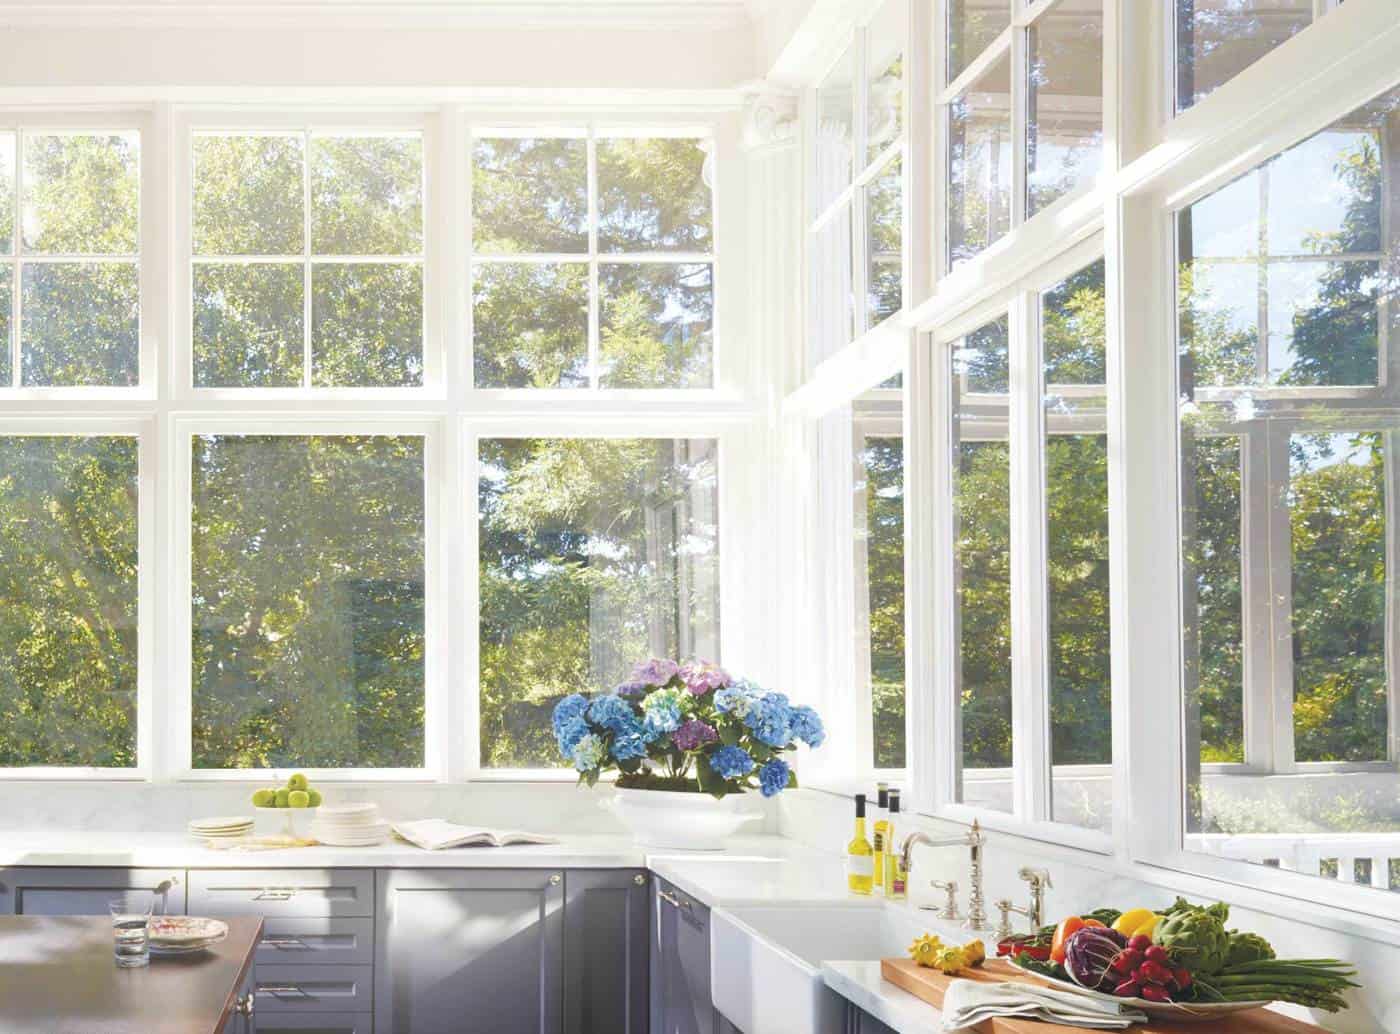 Luxury kitchen before installing custom window treatments